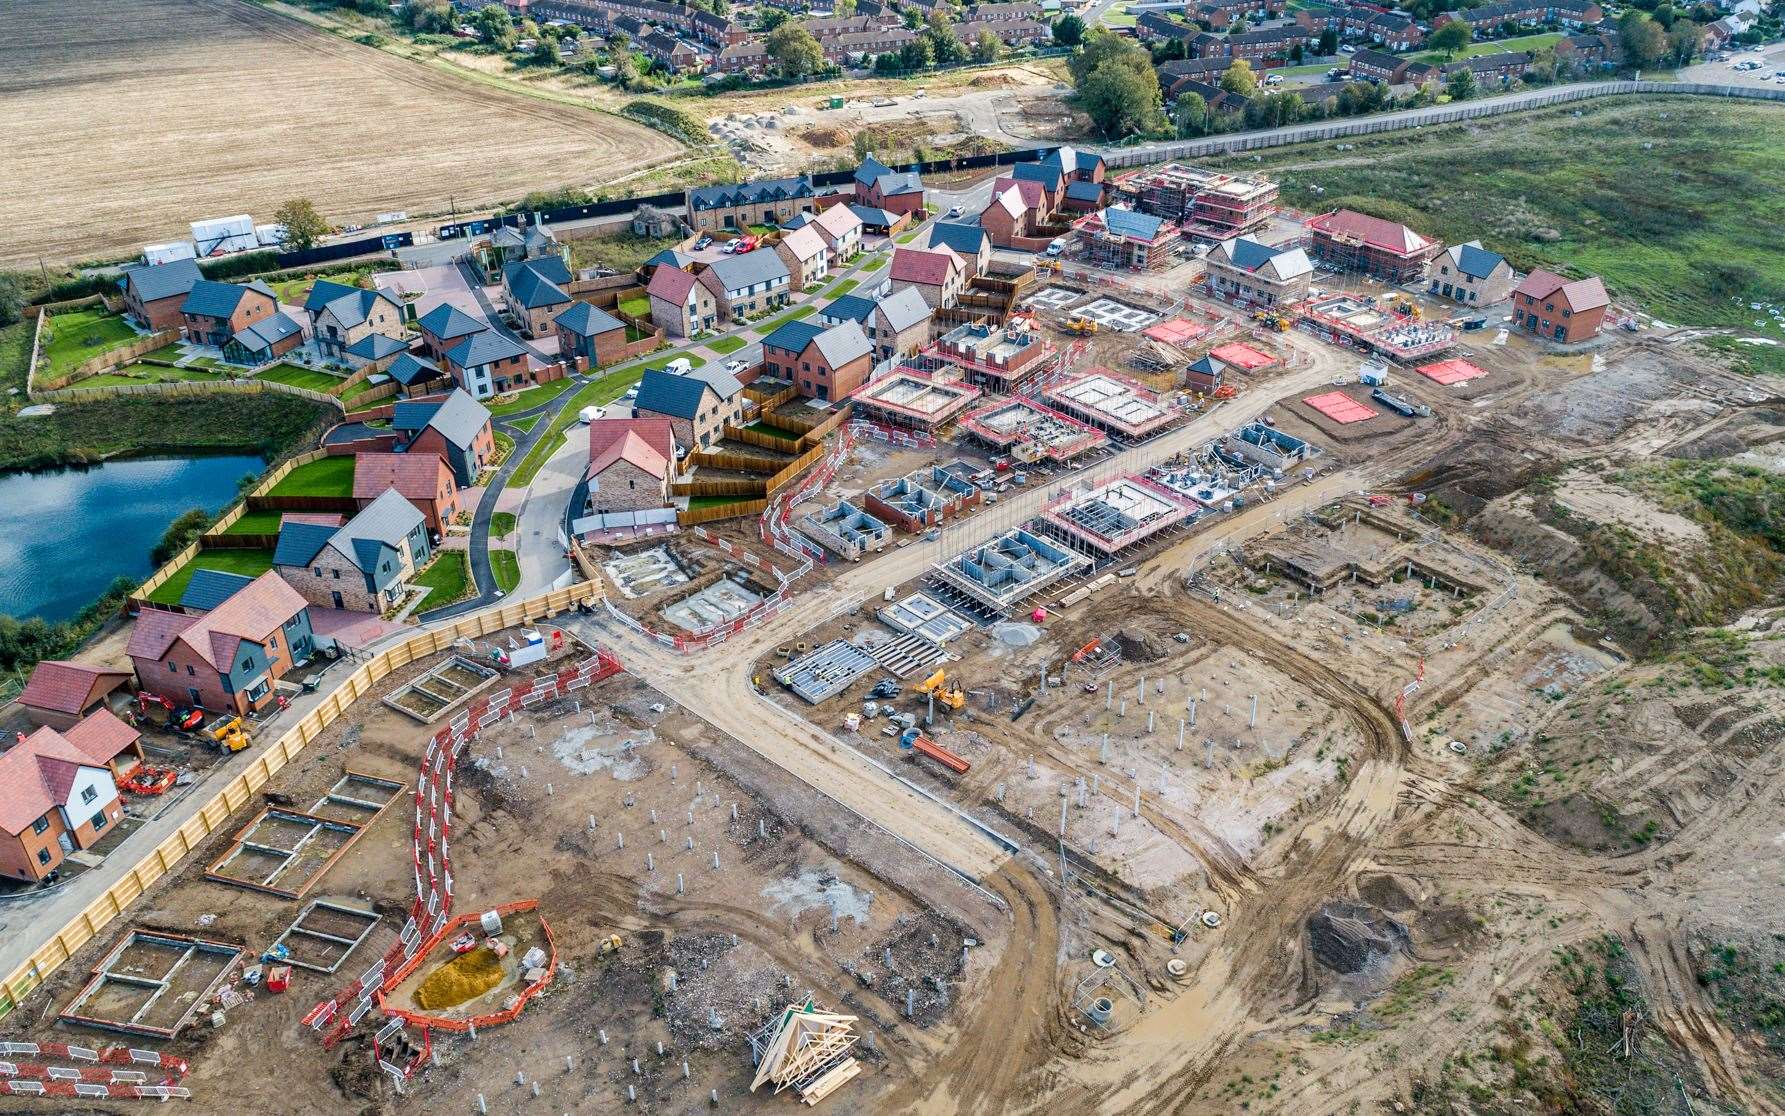 An aerial image of the Faversham Lakes development